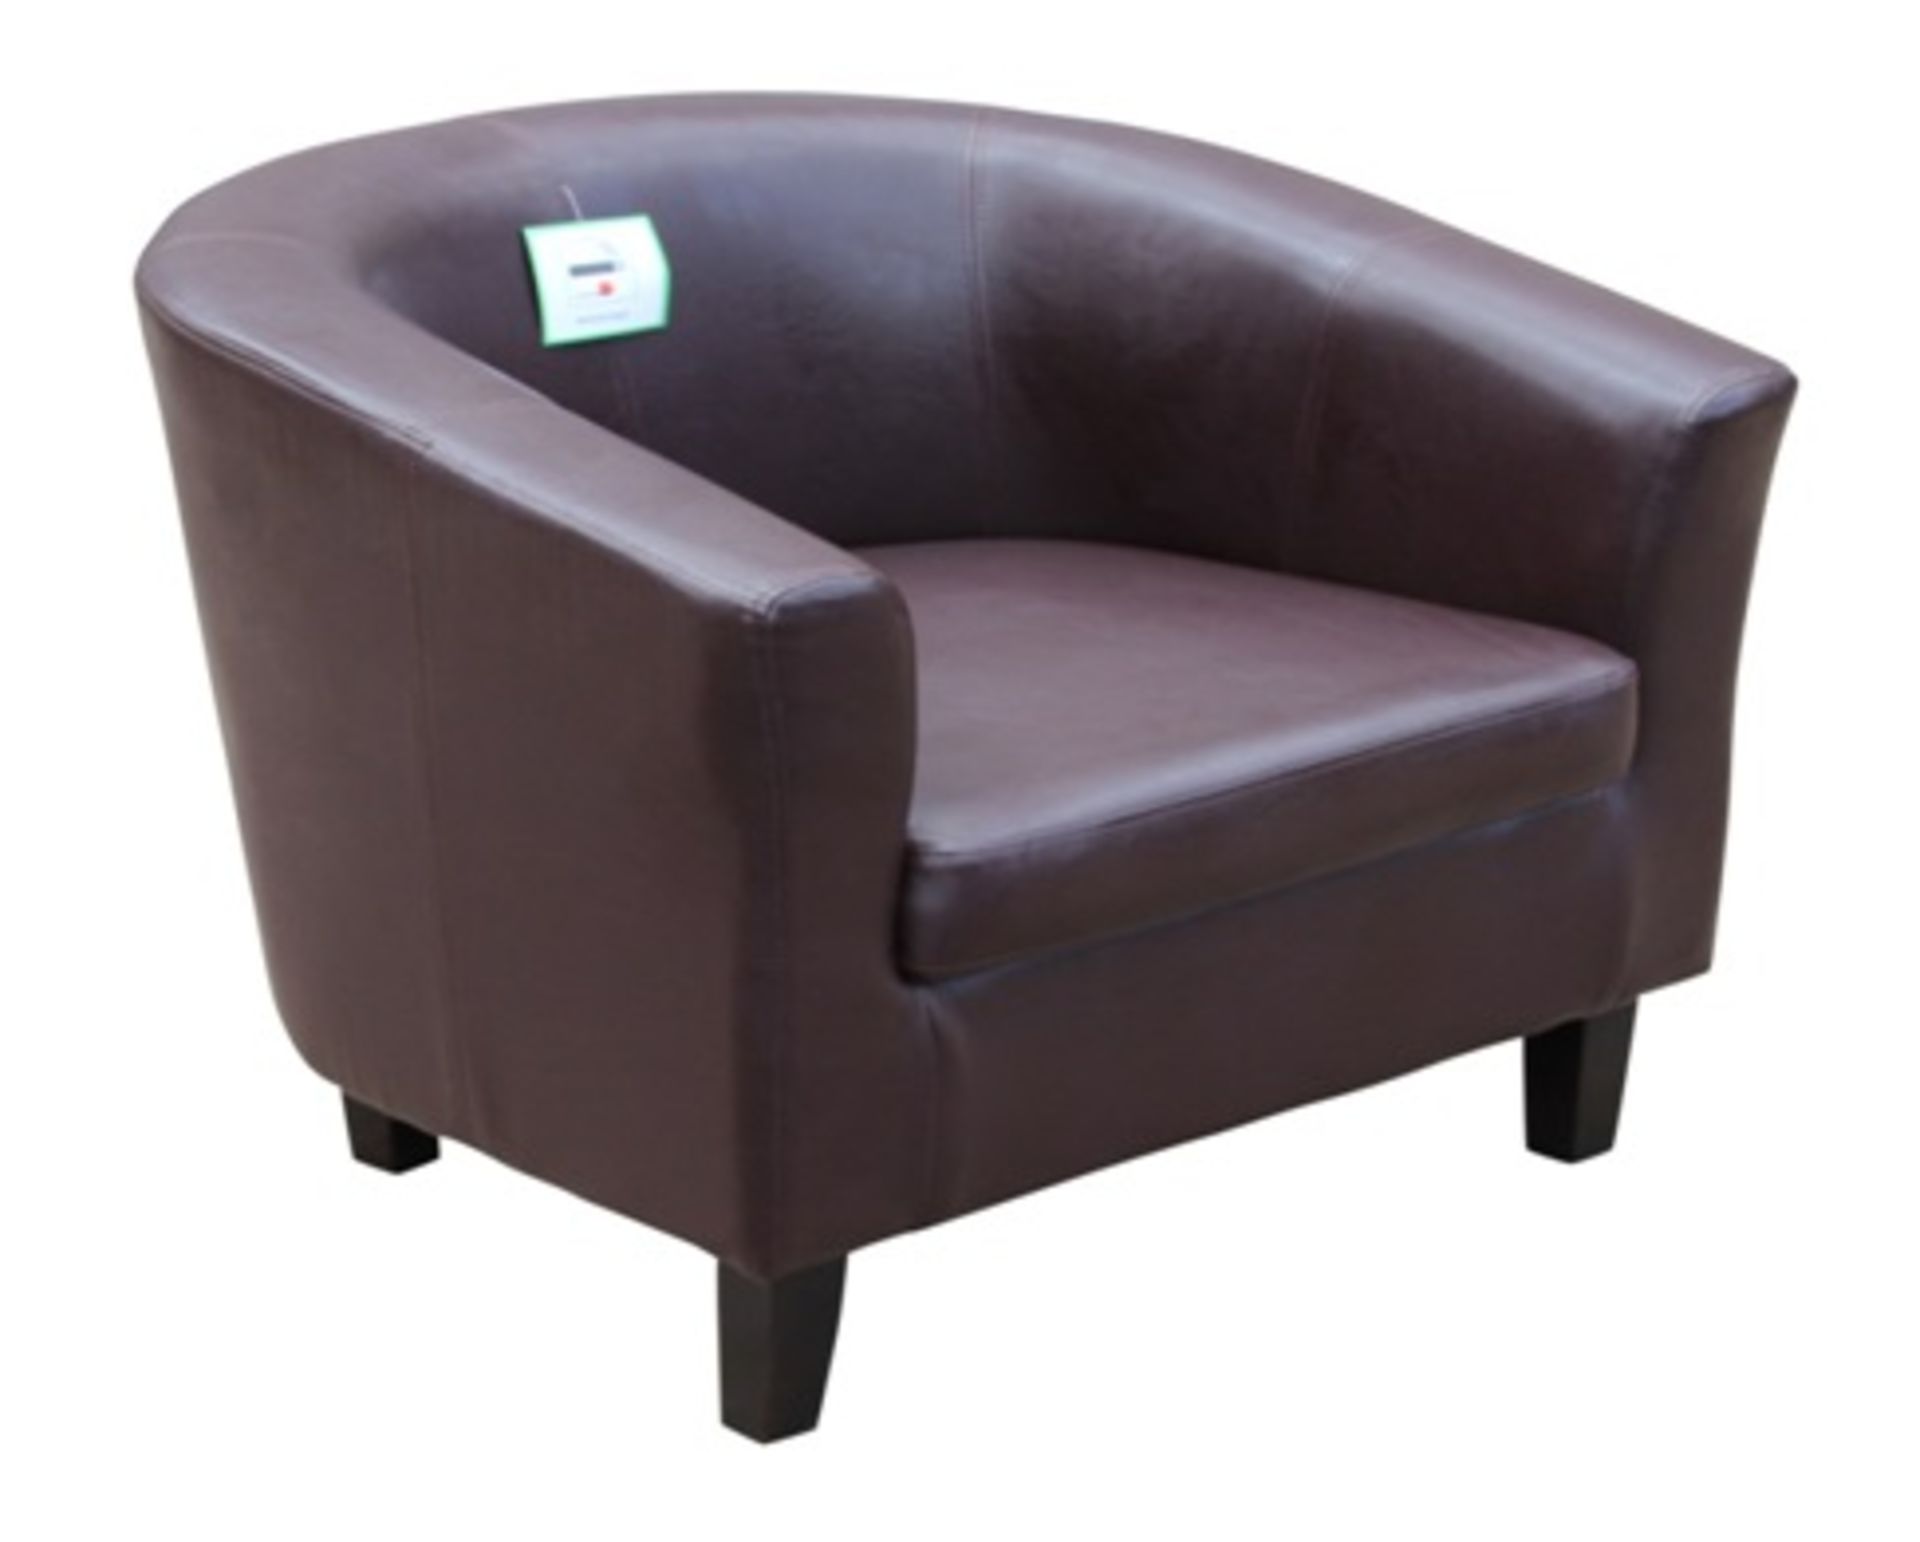 1 x Brown Faux Leather Tub Chair - ACH001 (Brand New)